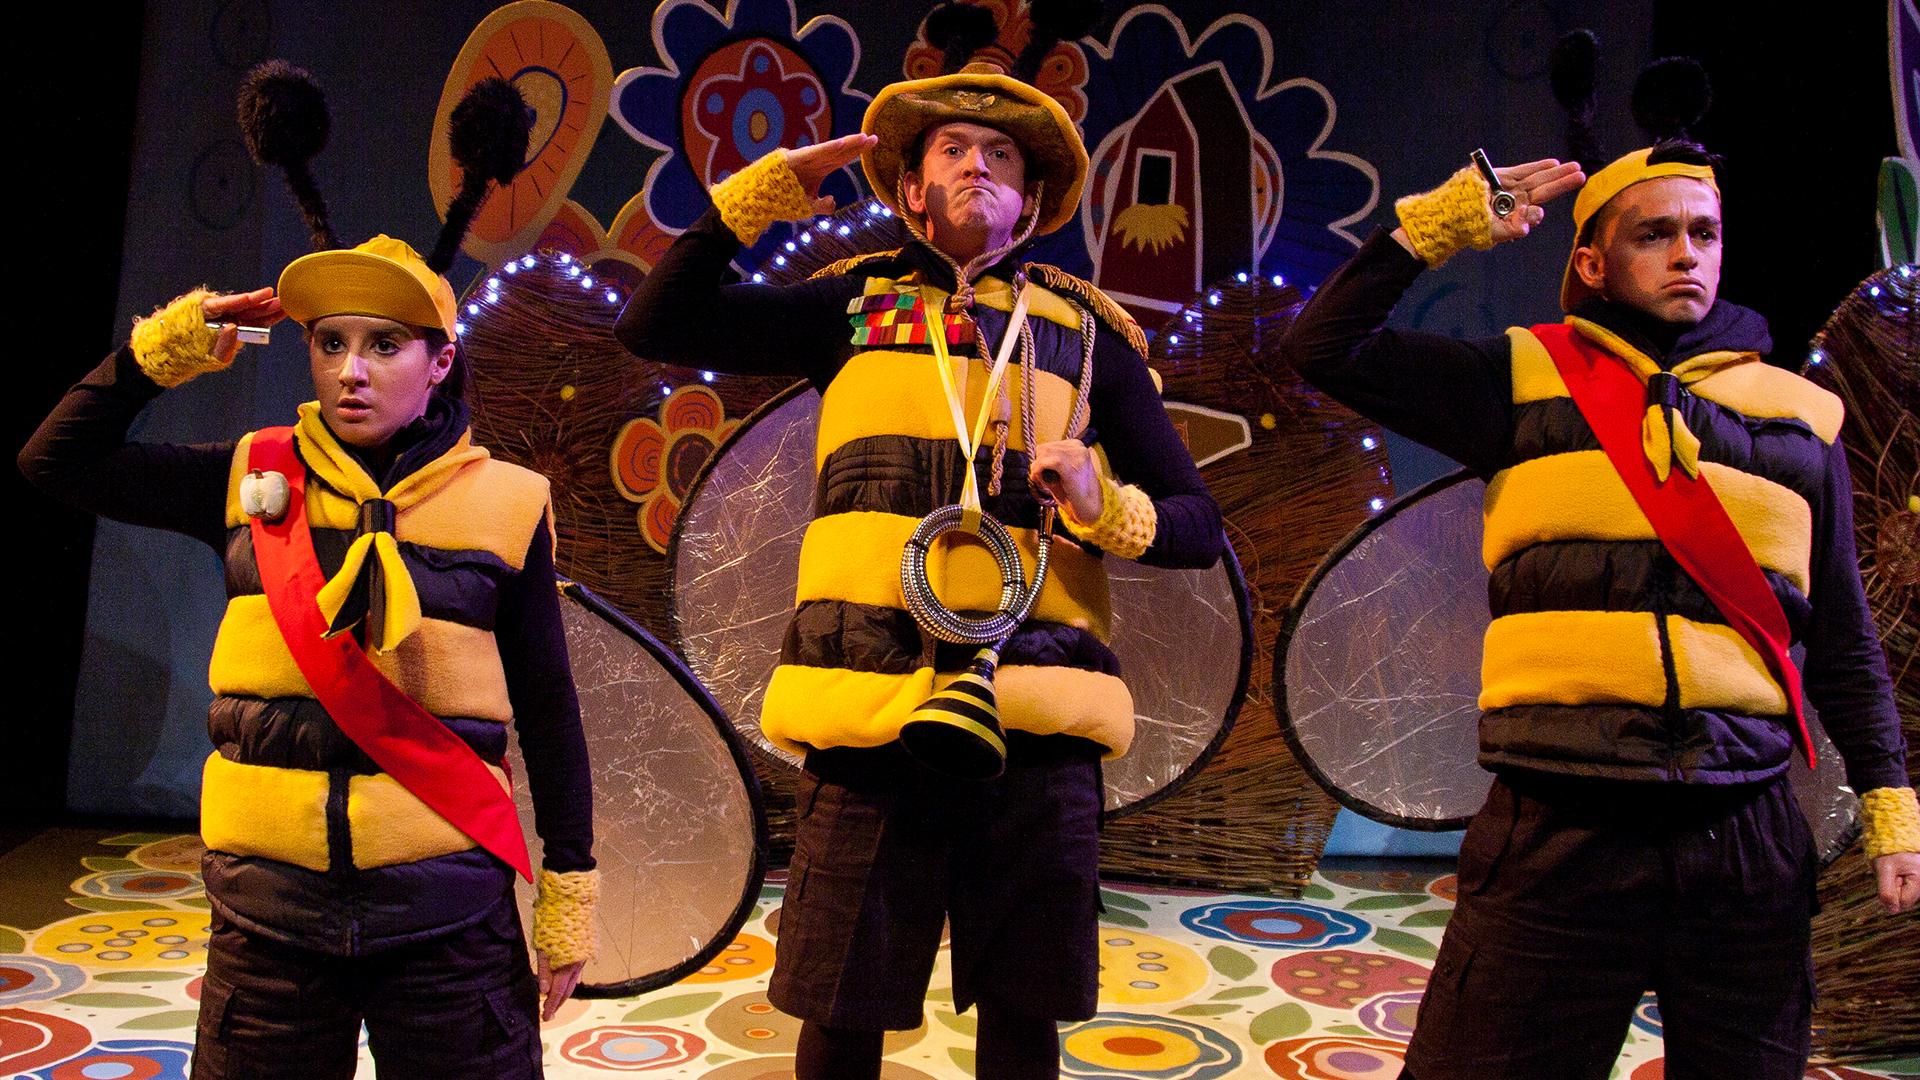 Three people dressed as bees standing saluting